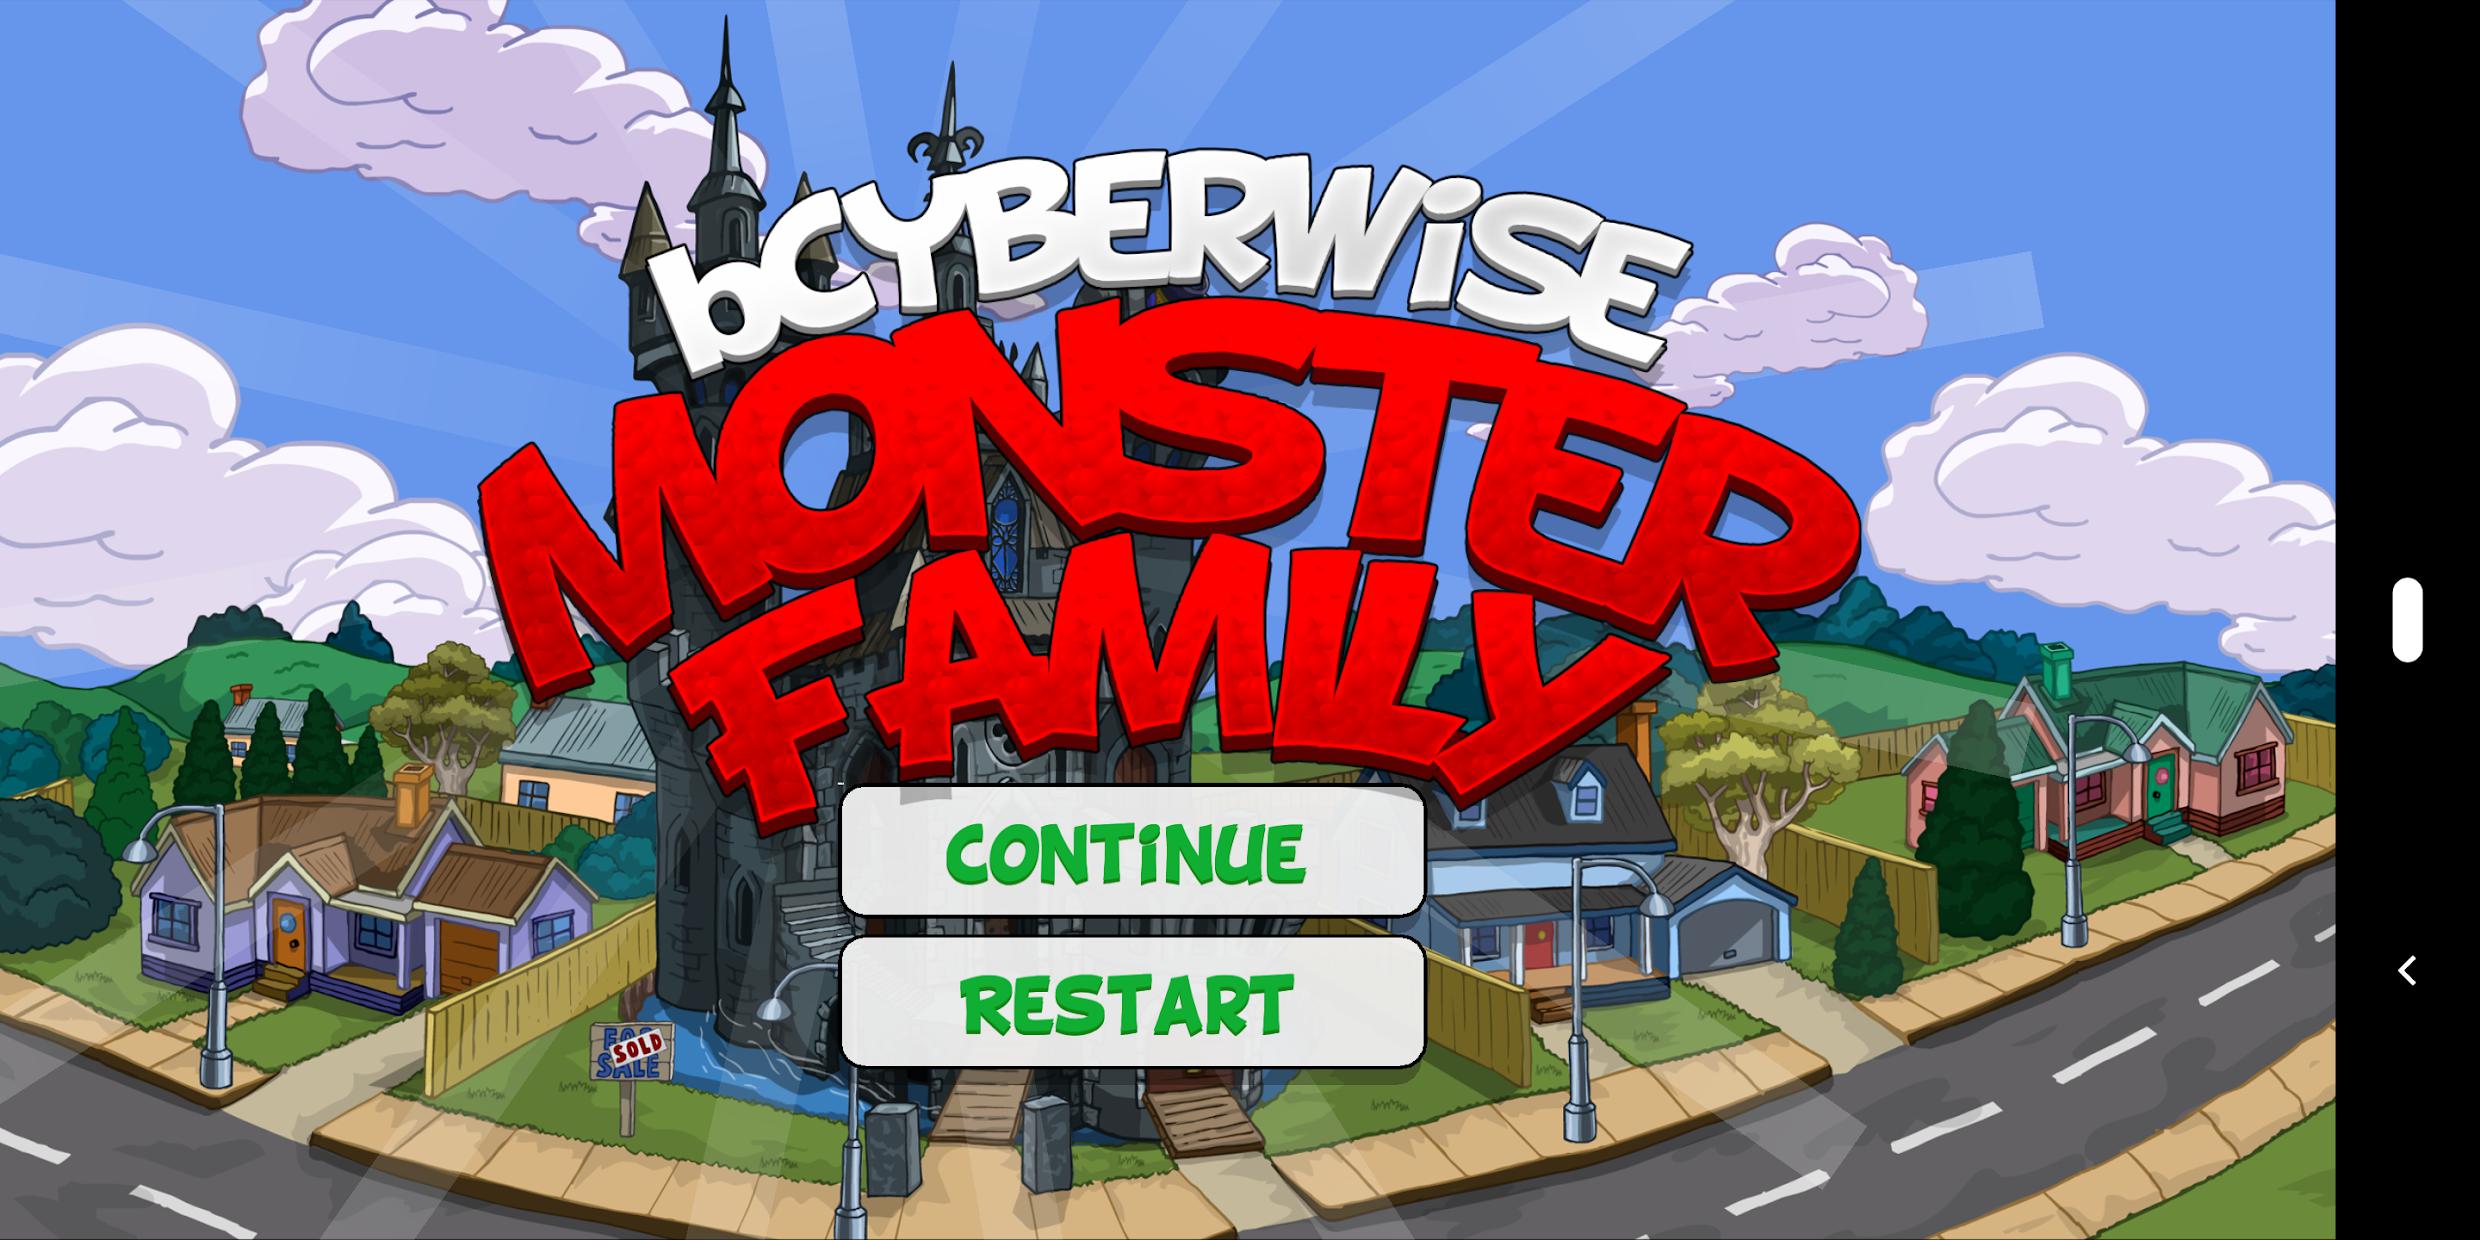 bCyberwise Monster Family